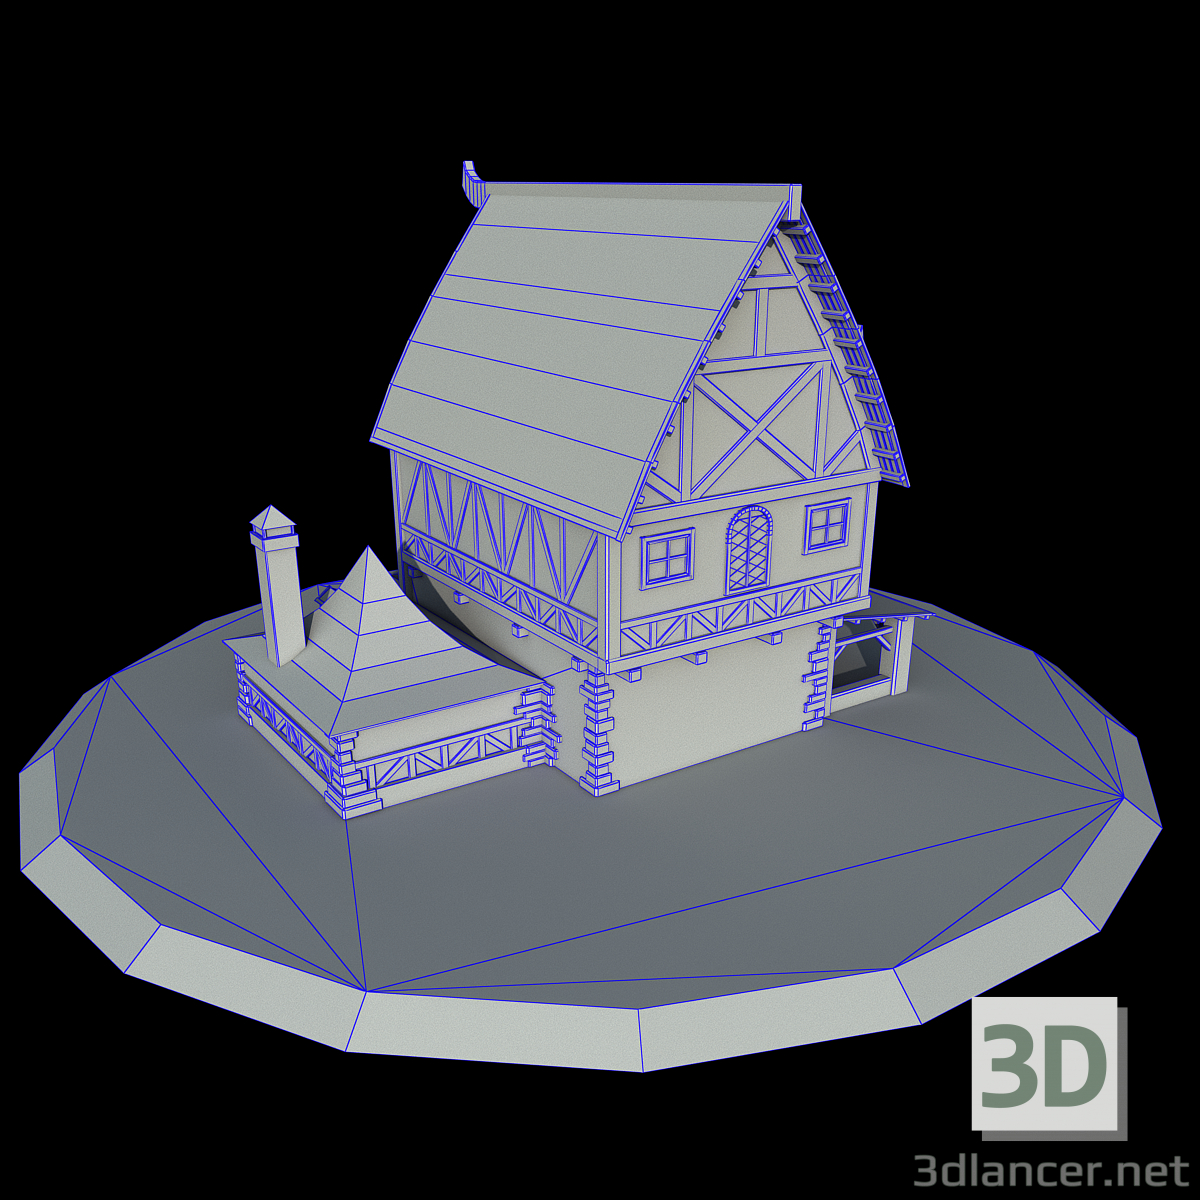 3d Country house model buy - render